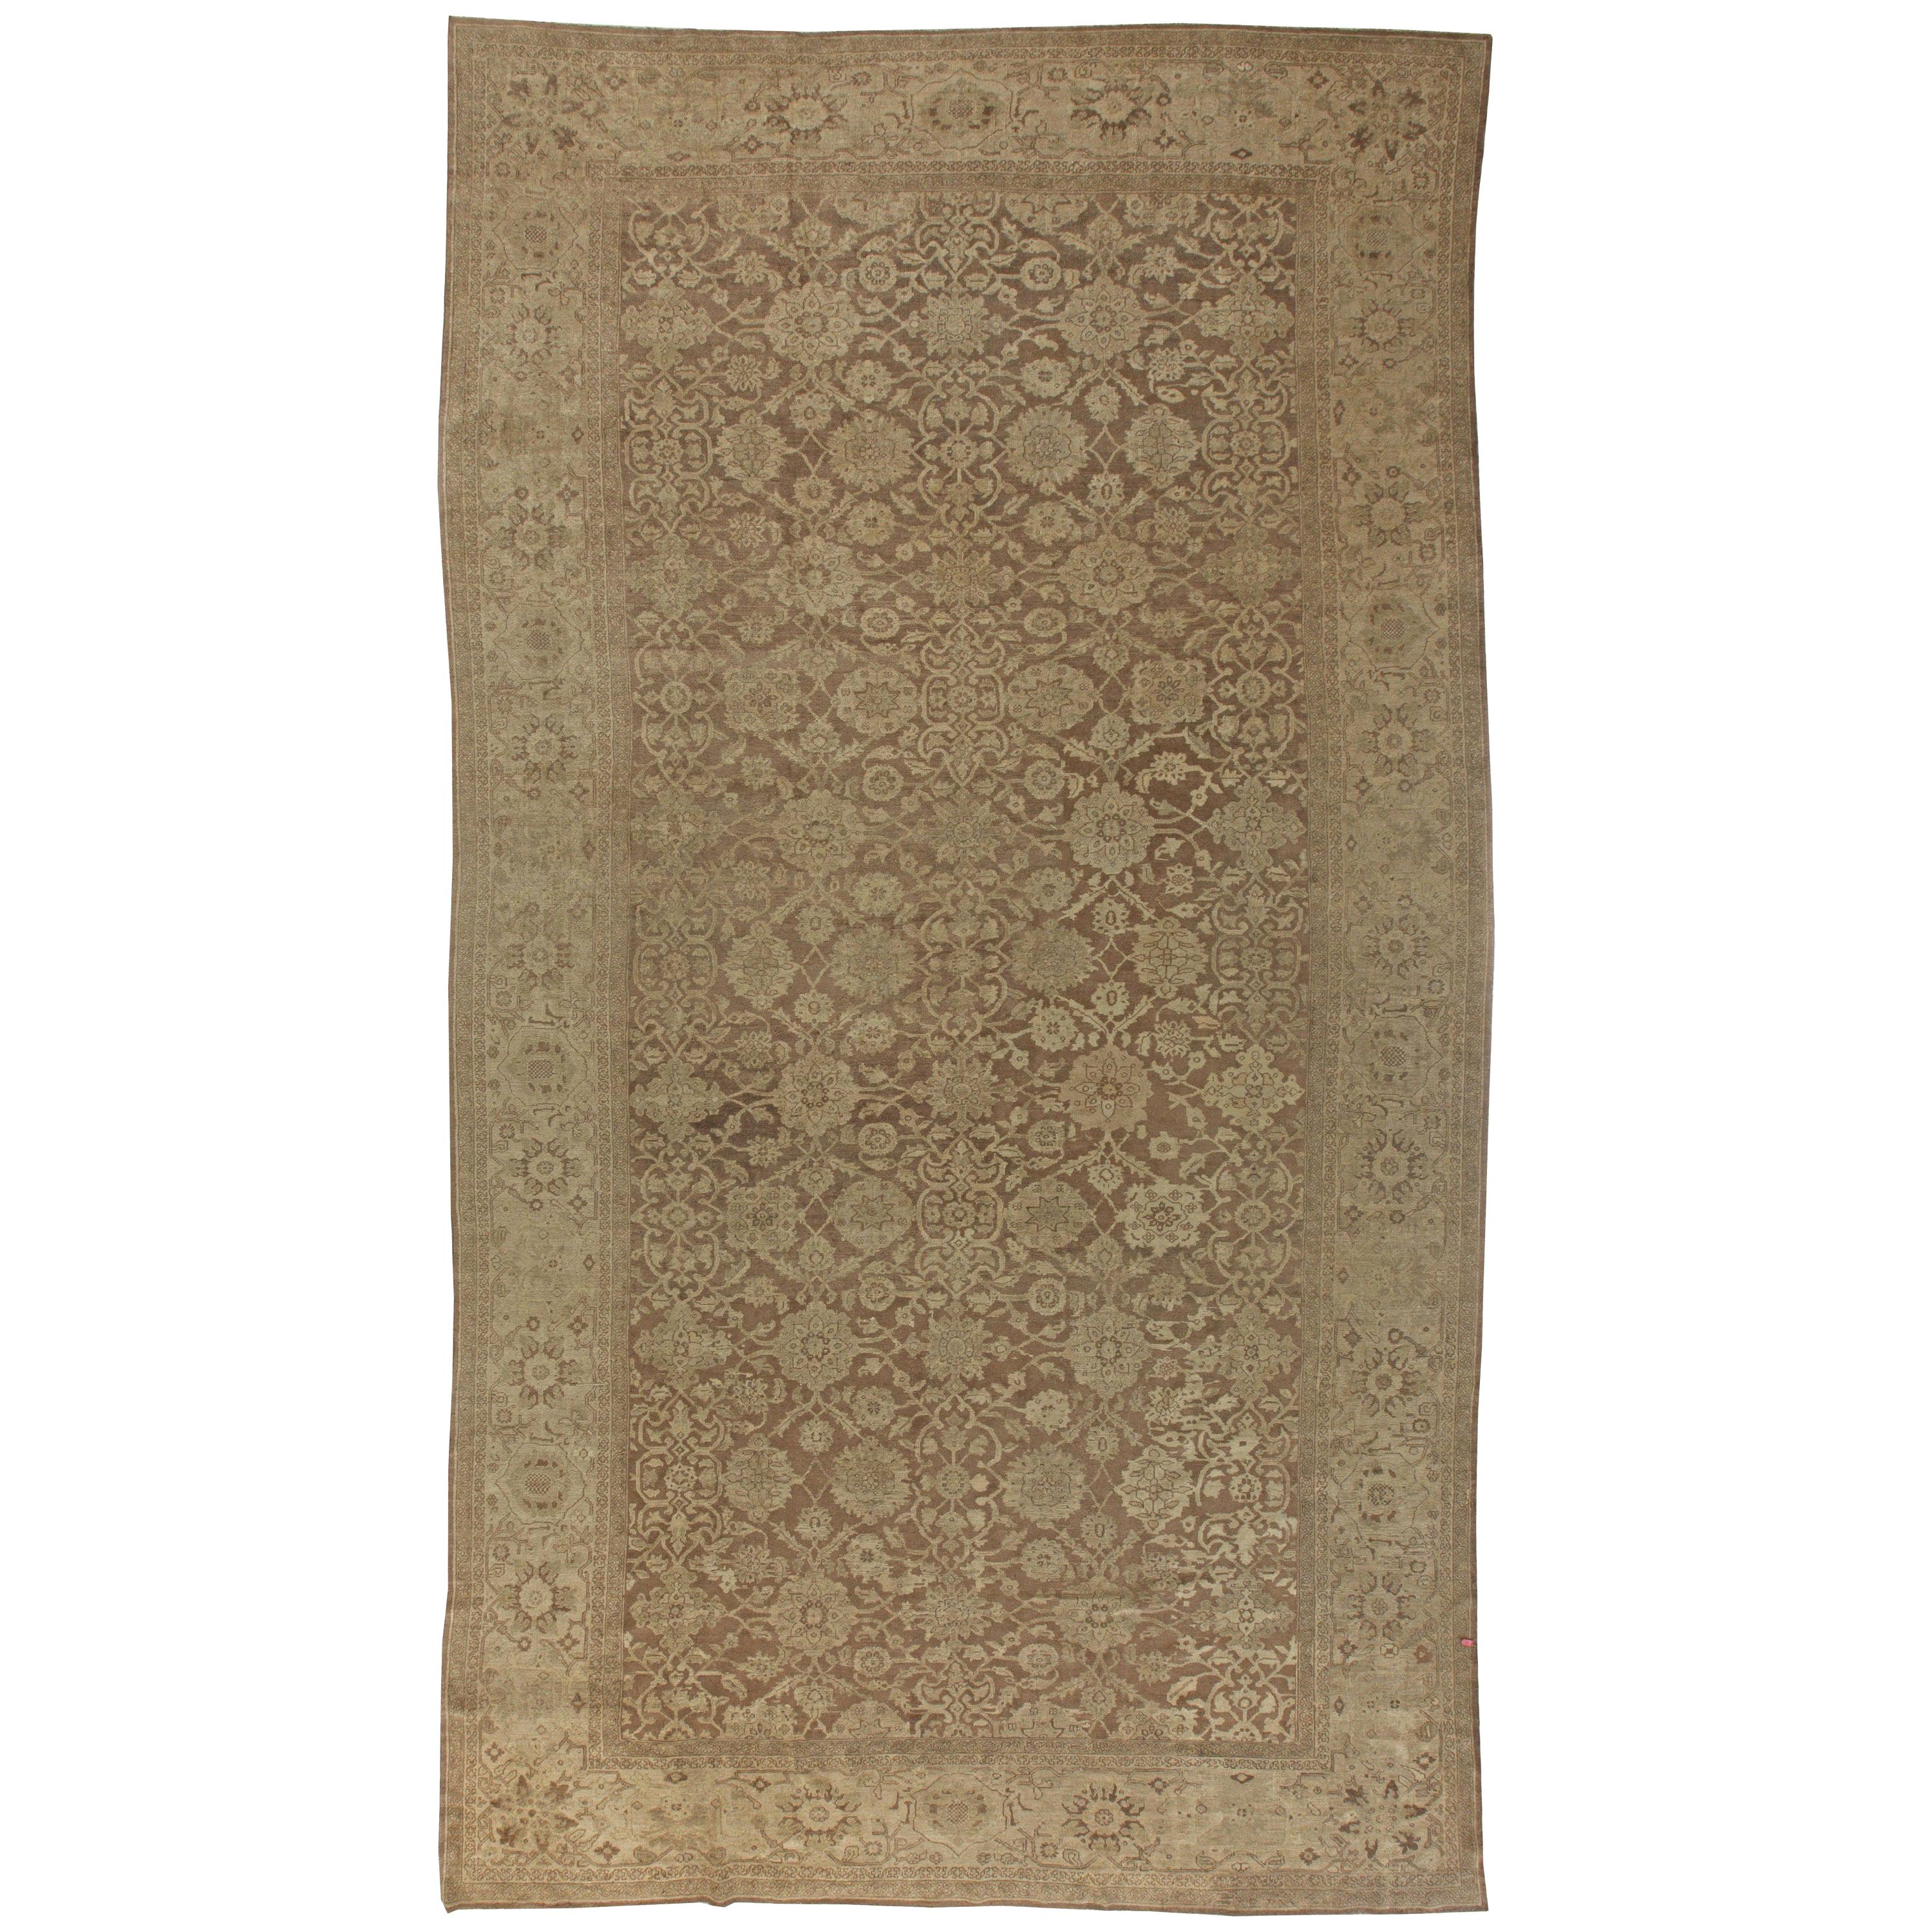 Antique Persian Sultanabad Brown Handmade Wool Rug